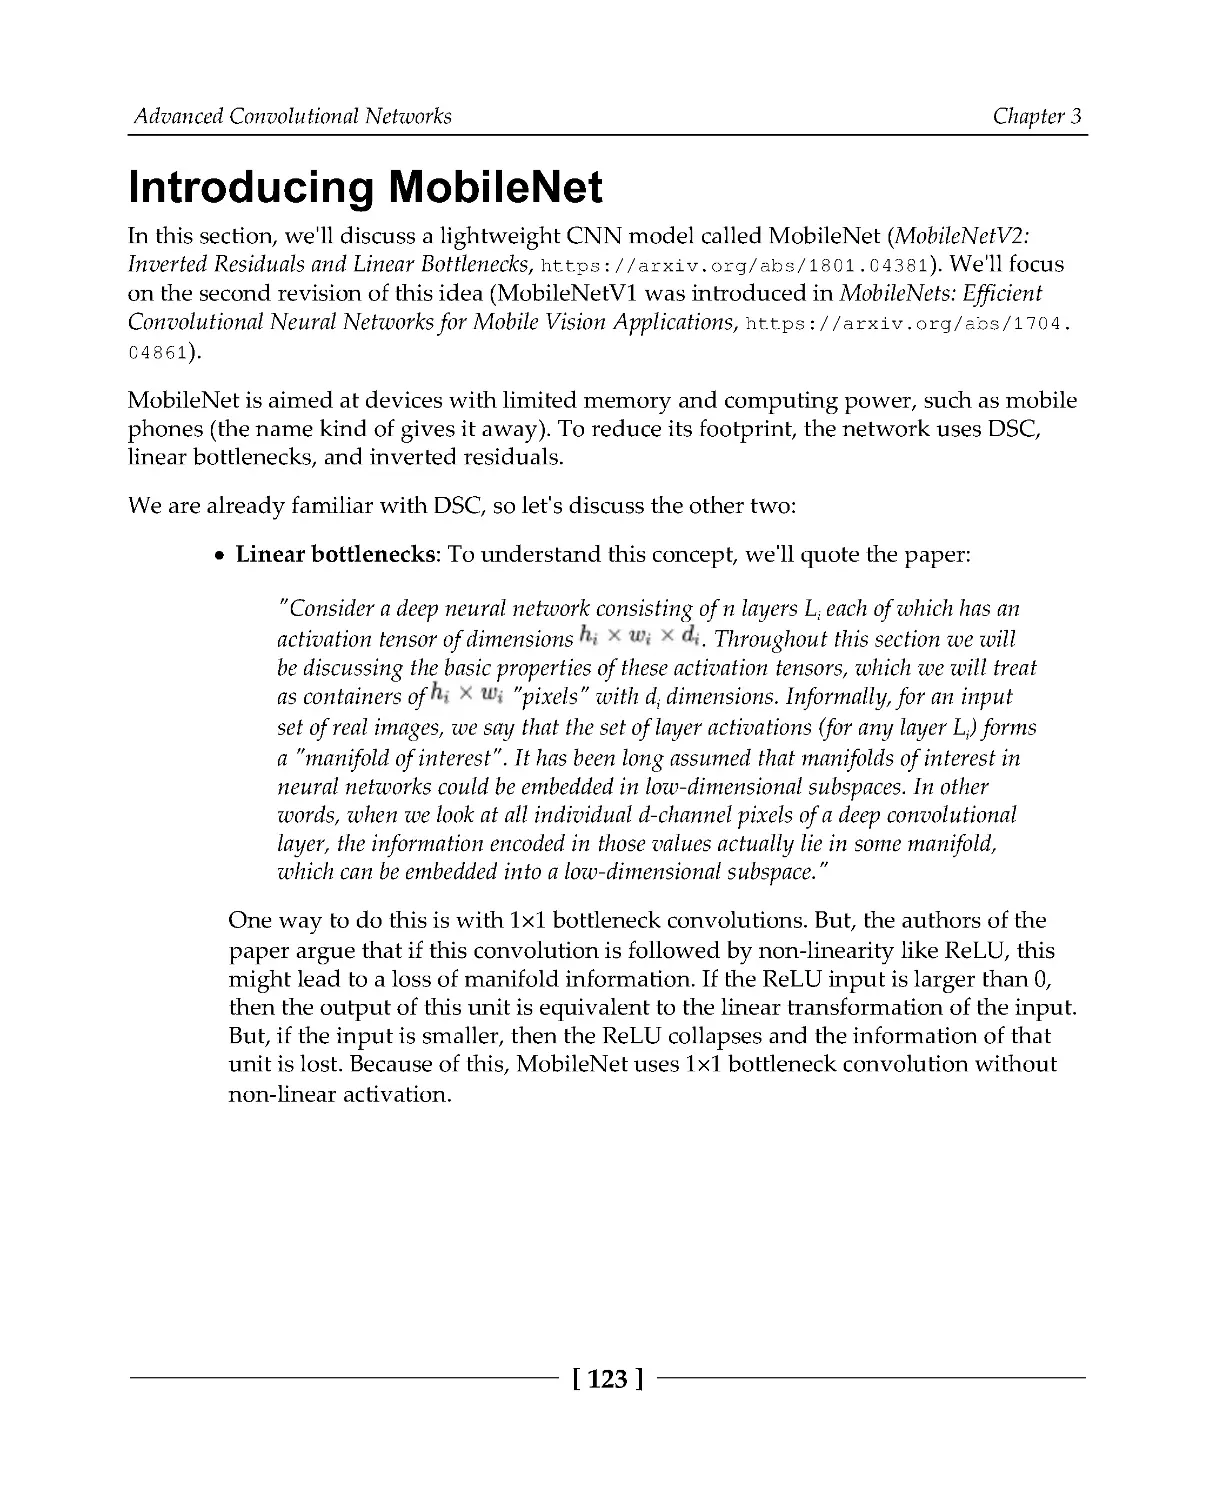 Introducing MobileNet